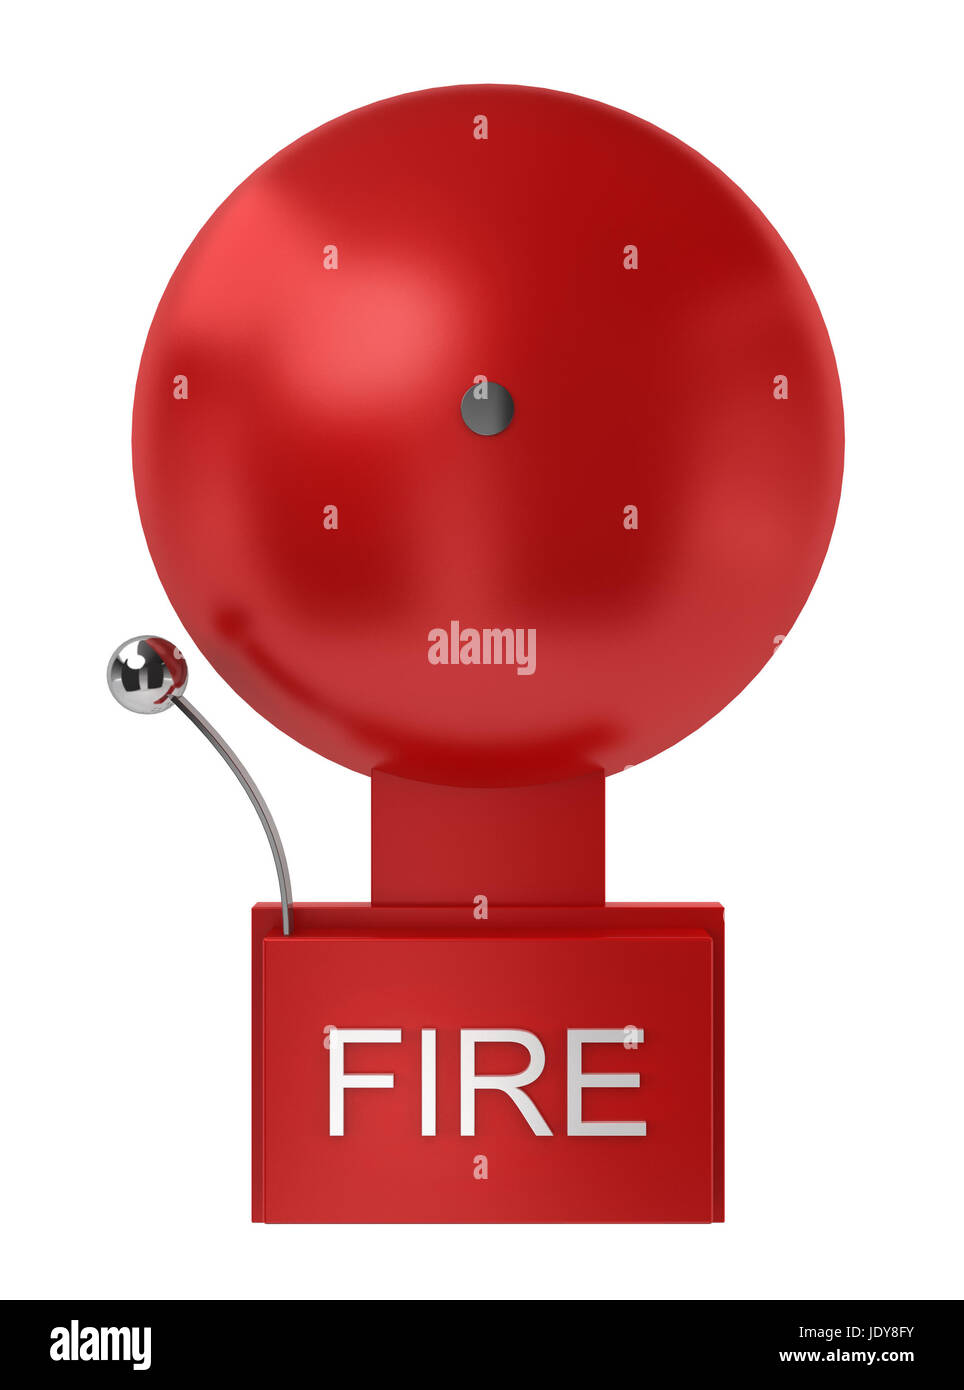 Fire alarm. 3d illustration on white background Stock Photo